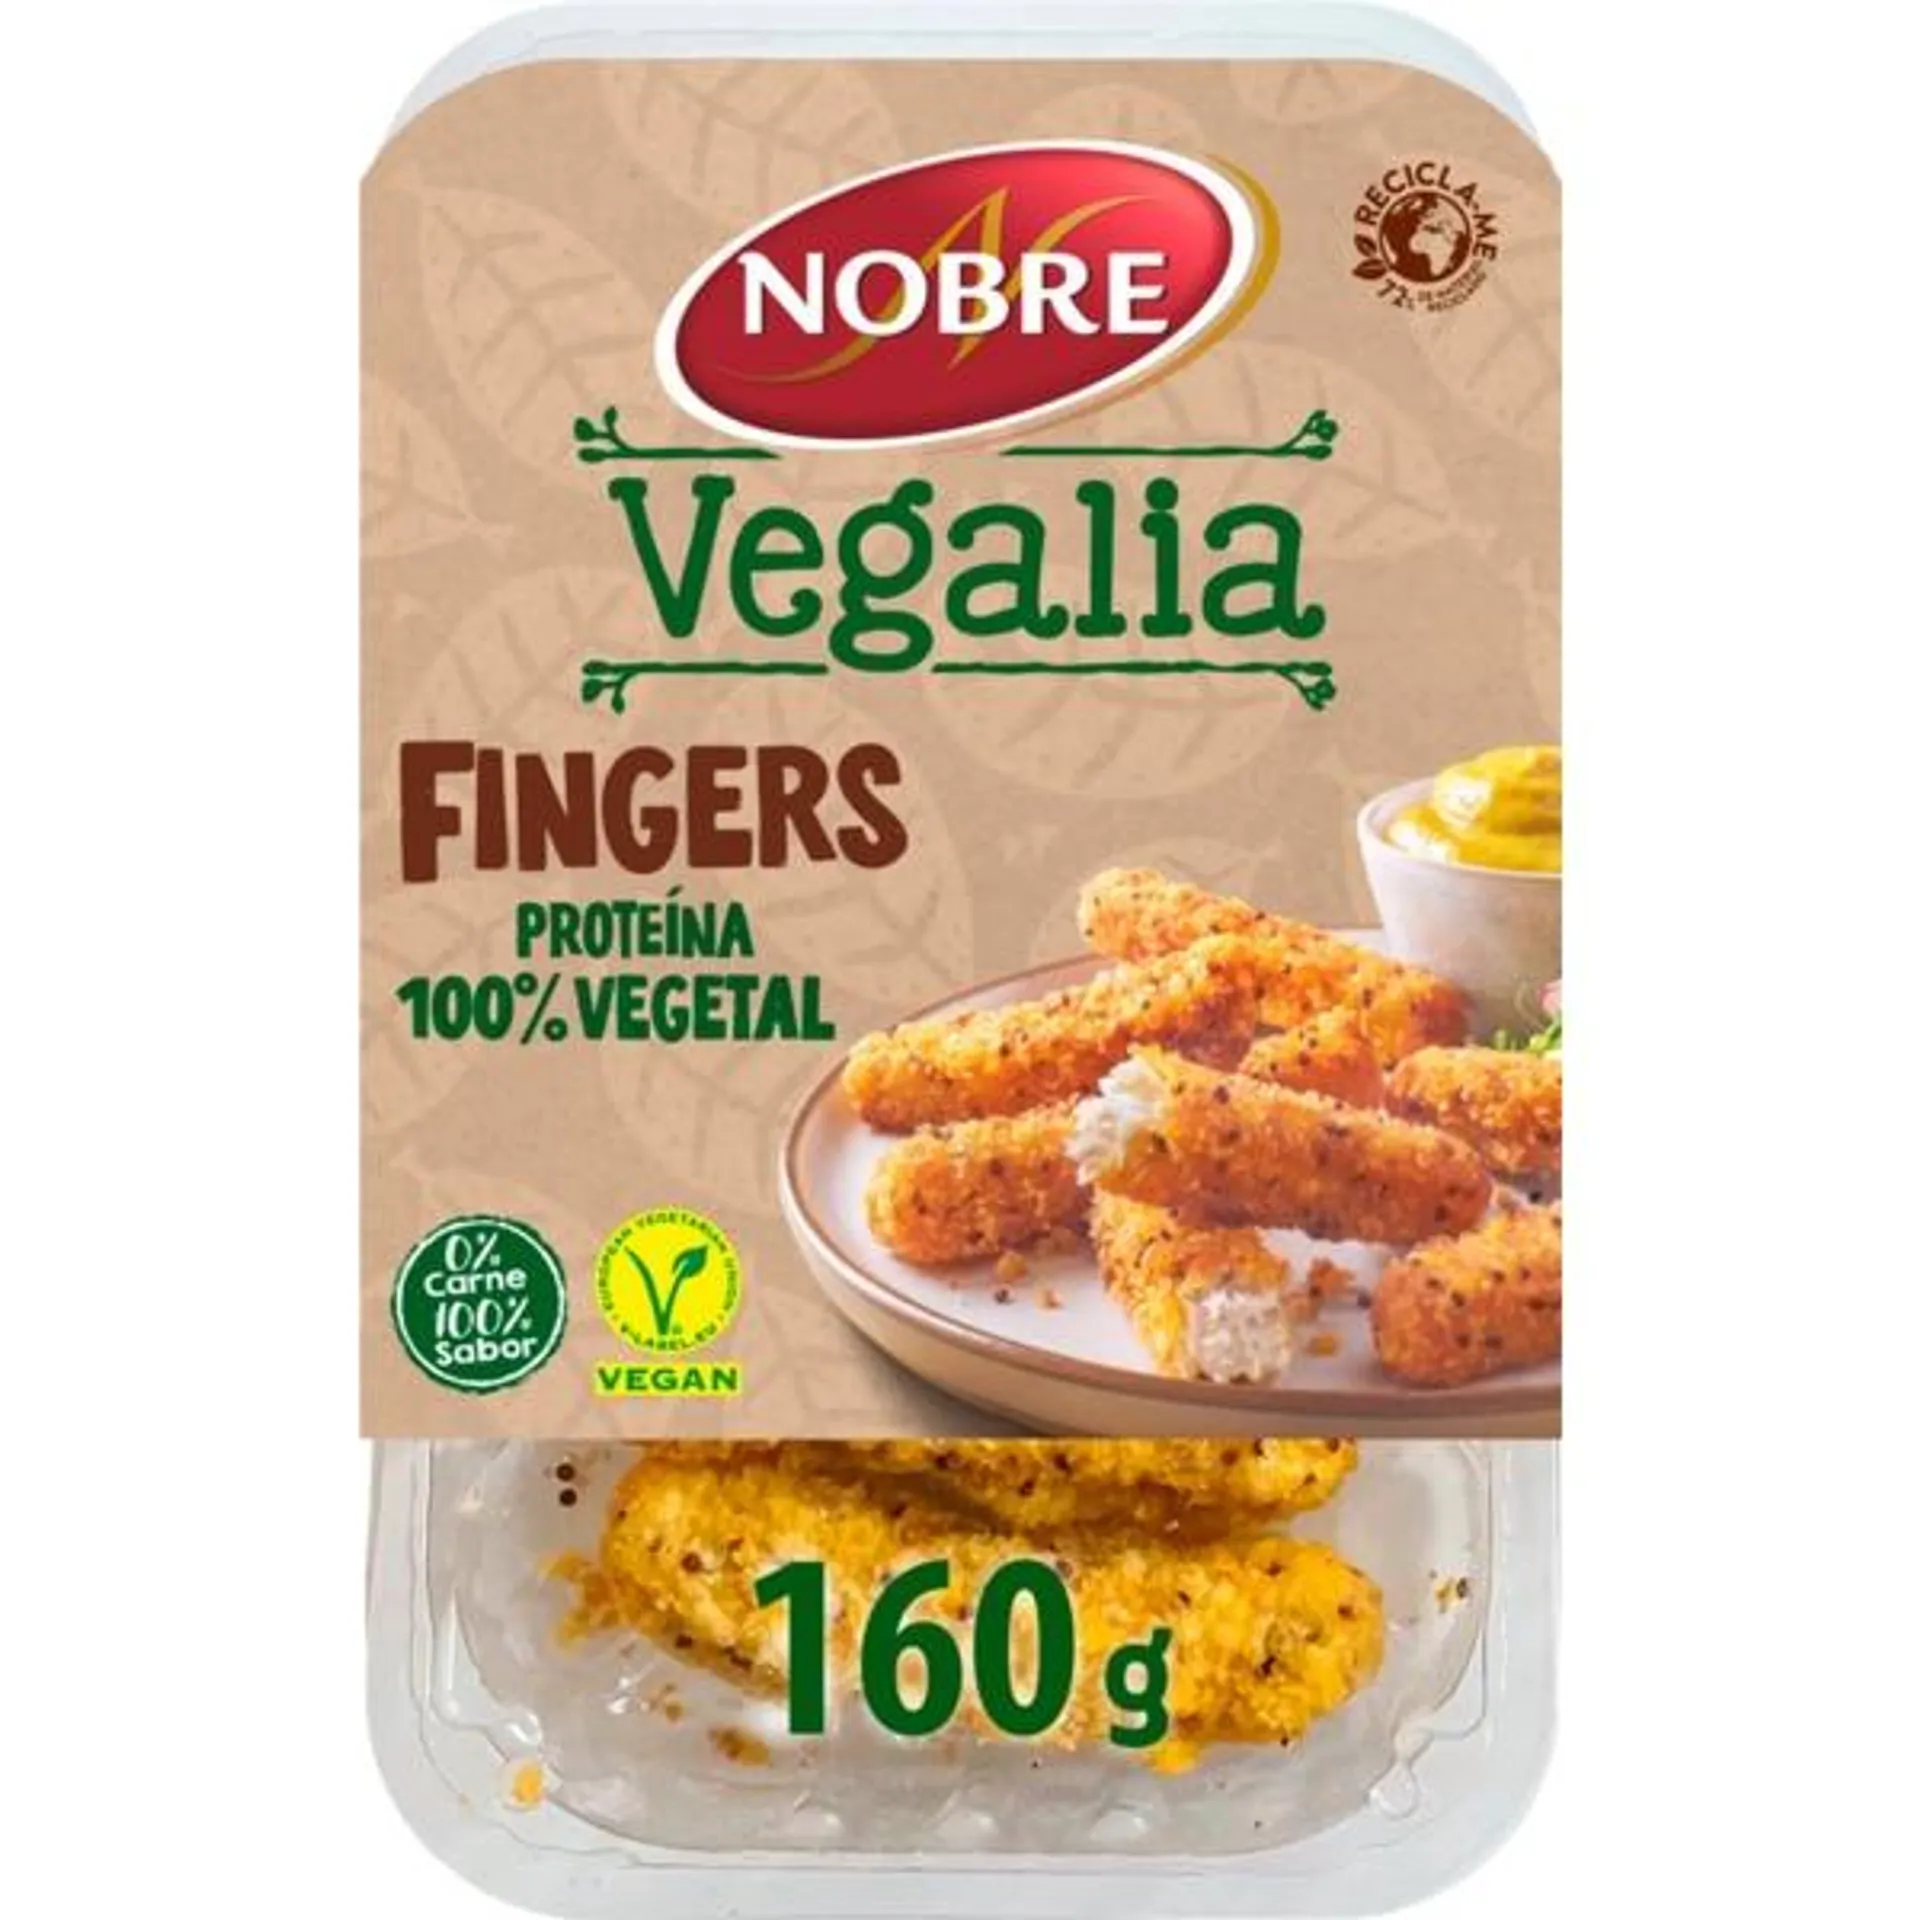 Vegalia Fingers Vegan embalagem 160 g Nobre